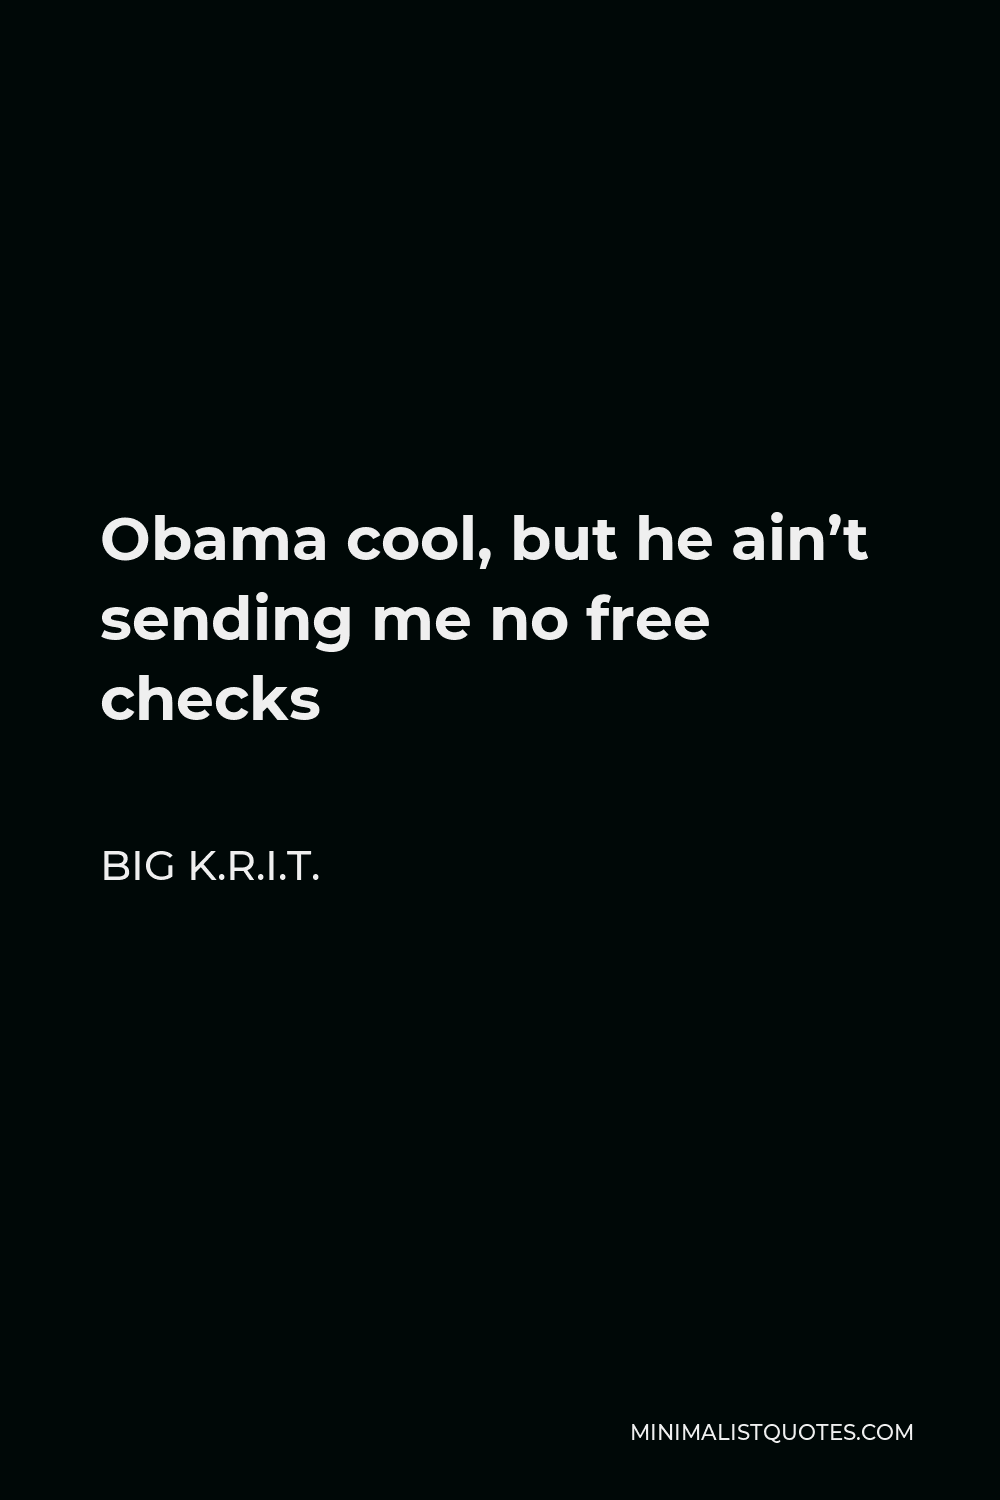 Big K.R.I.T. Quote - Obama cool, but he ain’t sending me no free checks